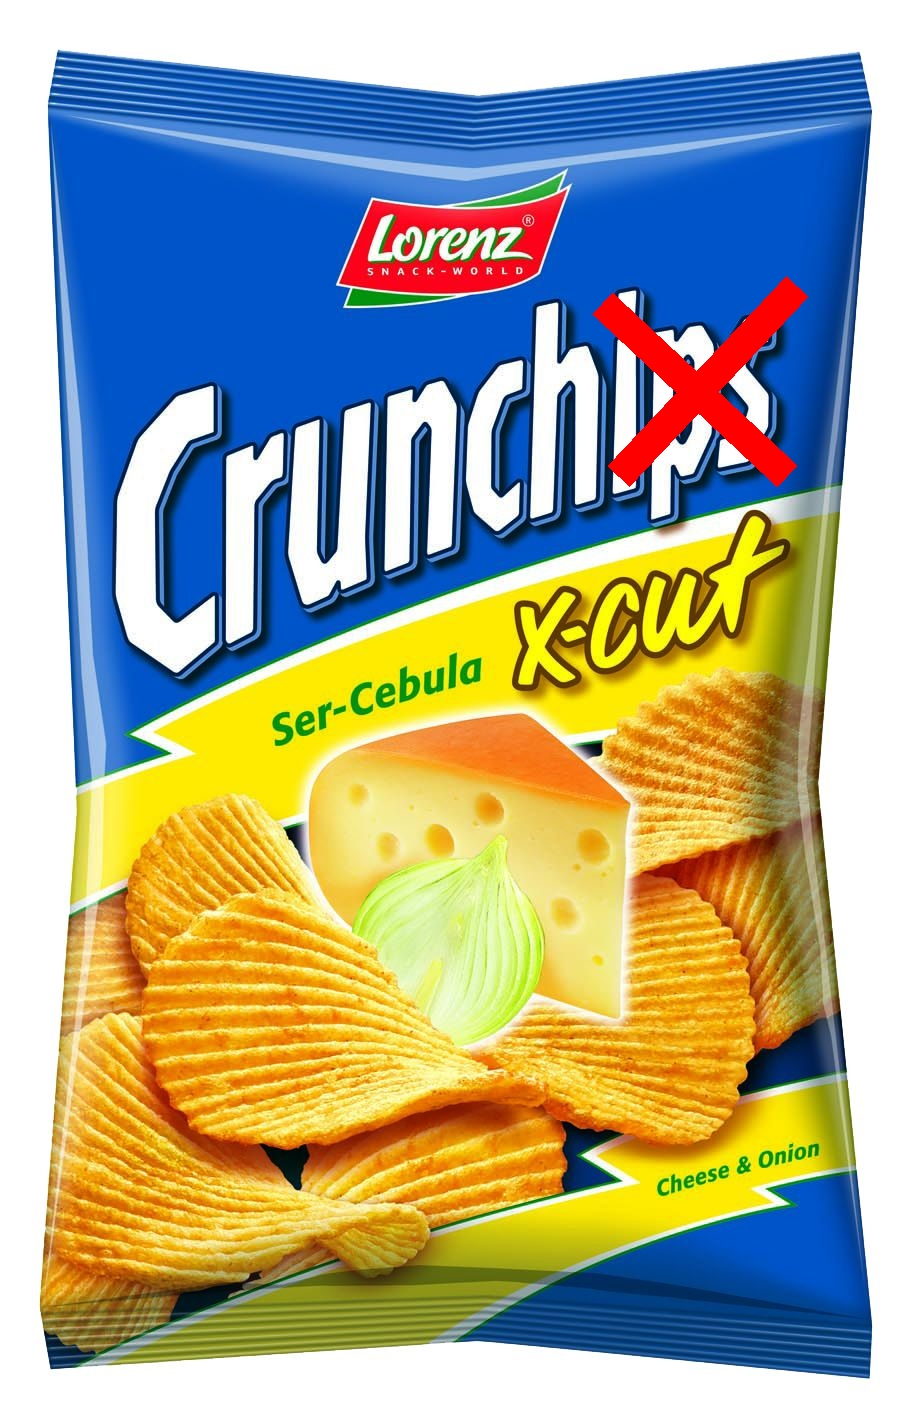 chipsy cebulowe crunchips